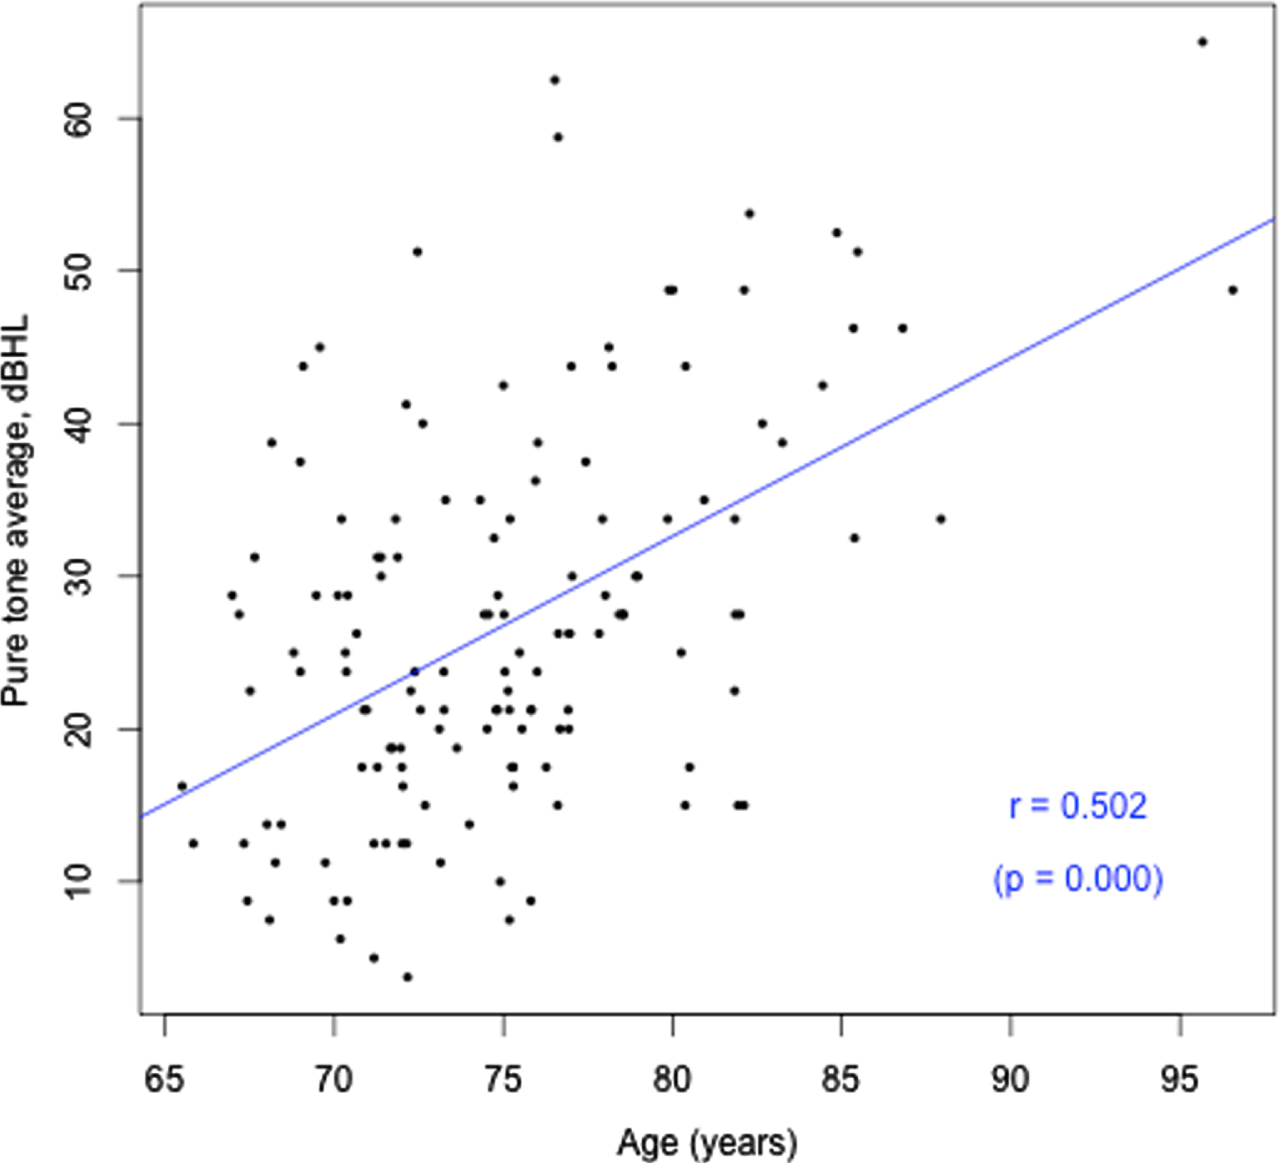 Age (years) versus HL (better ear PTA, dBHL).